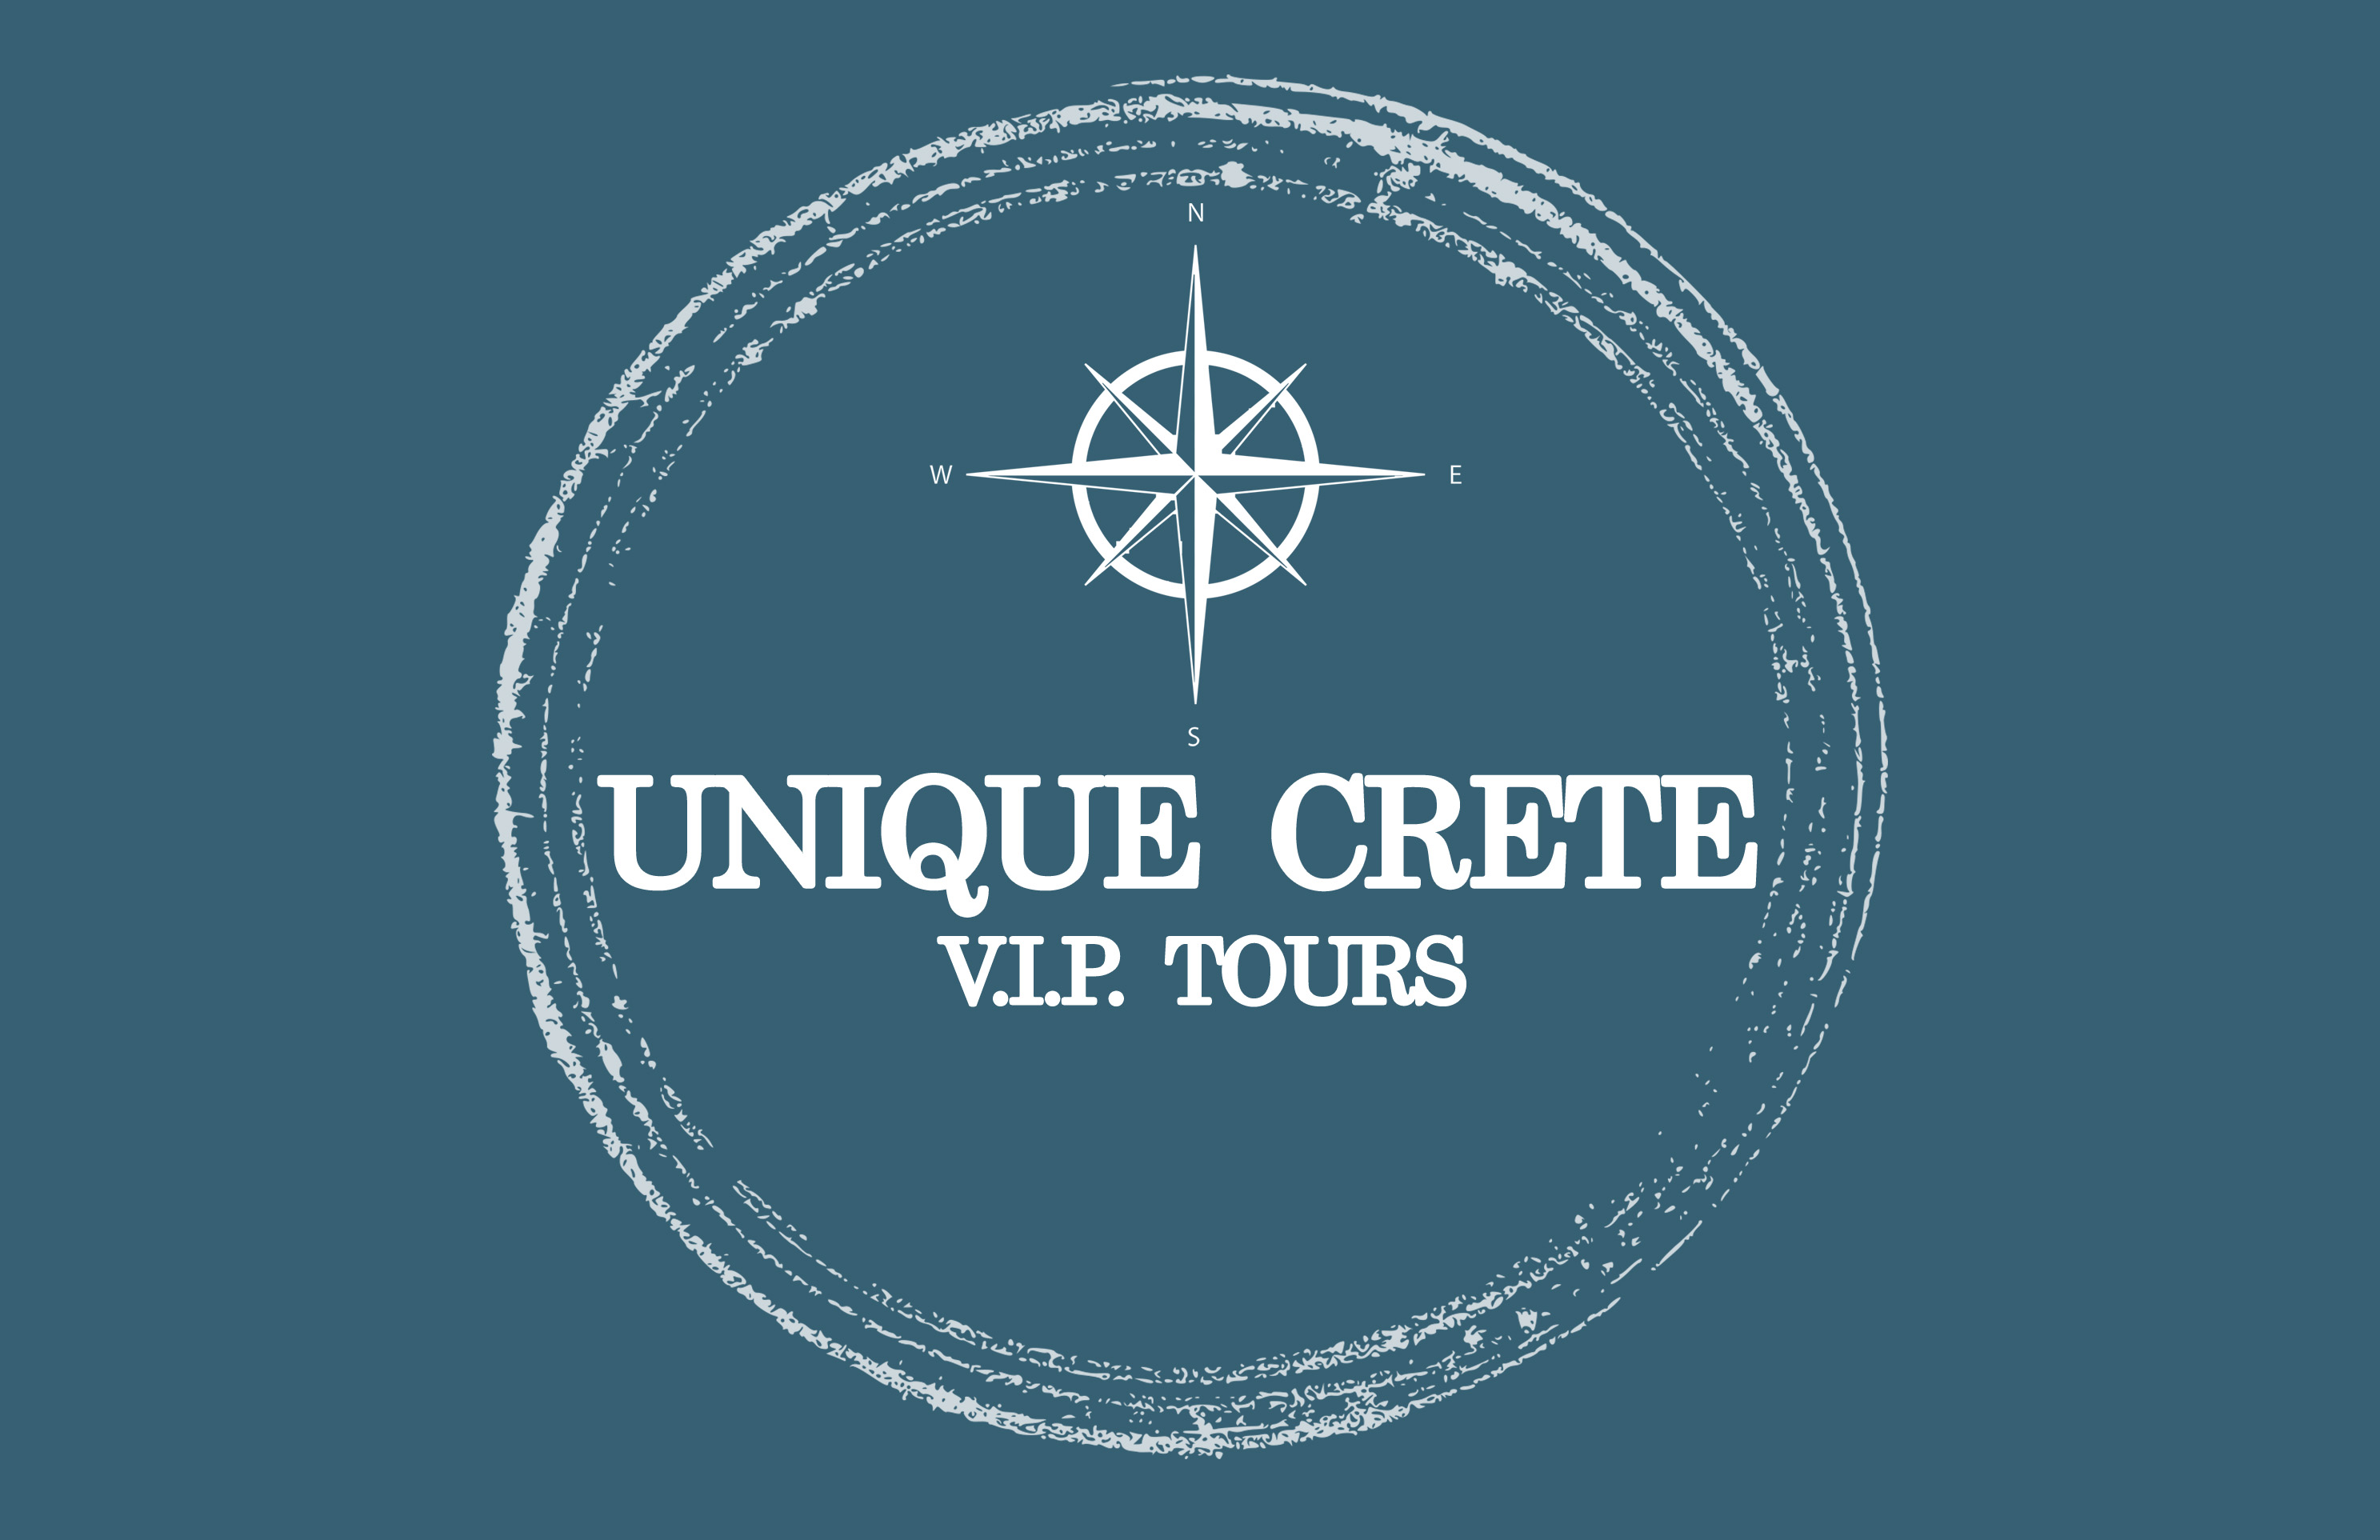 Unique Crete V.I.P. Tours picture 3